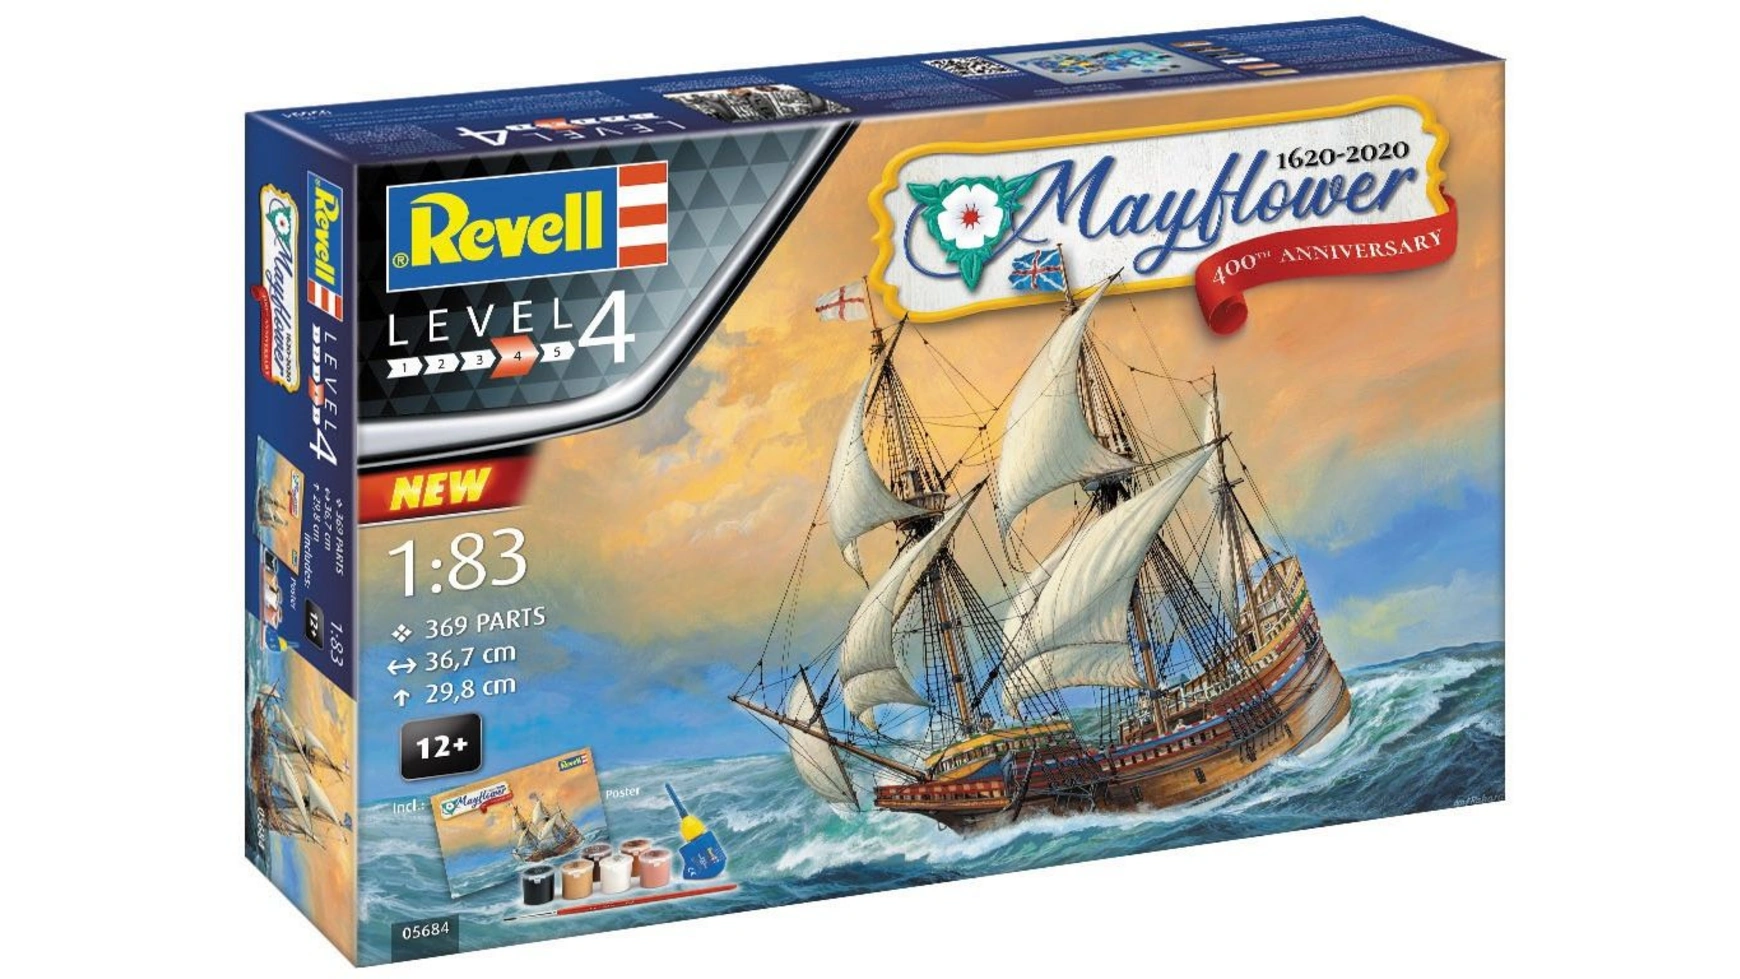 Revell Подарочный набор Mayflower 400-летие